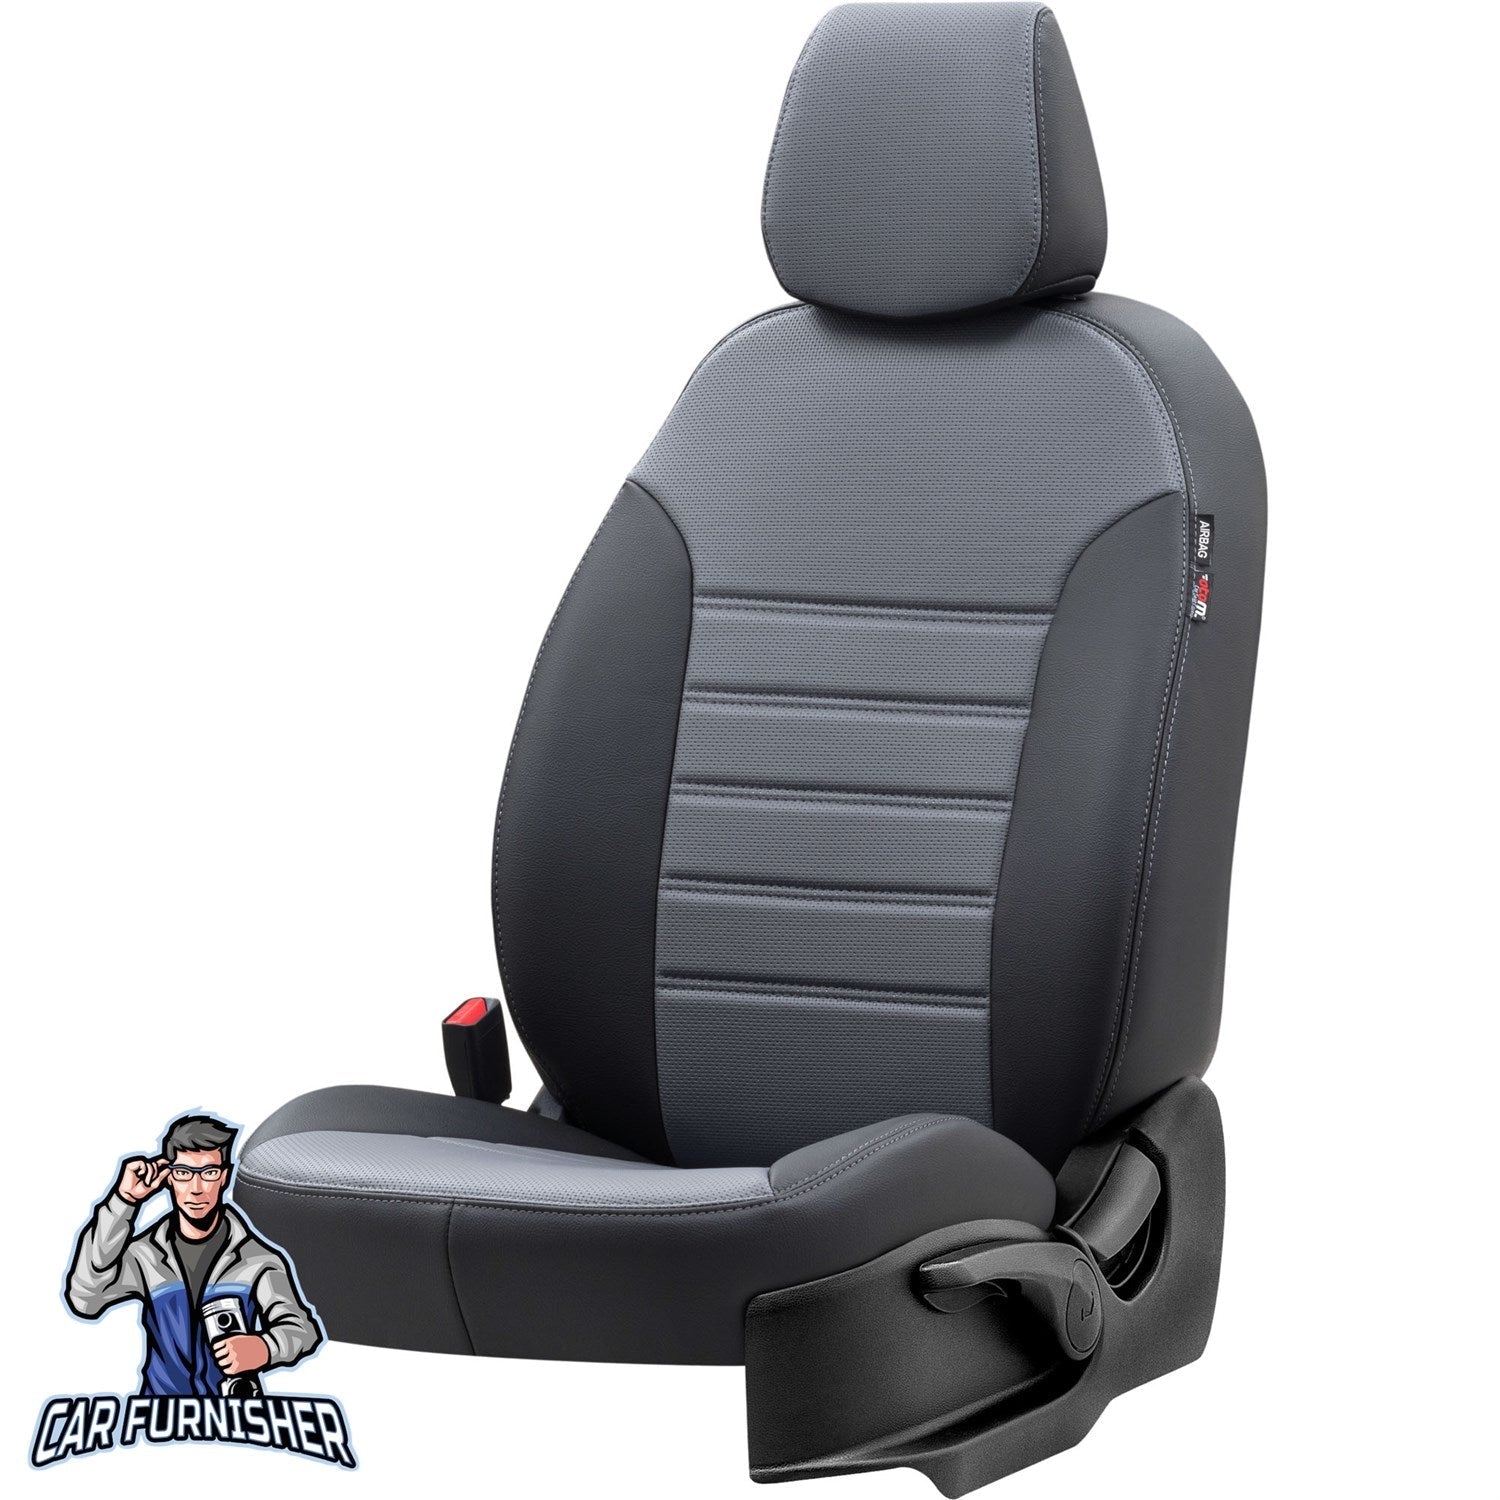 Fiat Bravo Car Seat Covers 2007-2013 New York Design Smoked Black Full Set (5 Seats + Handrest) Leather & Fabric